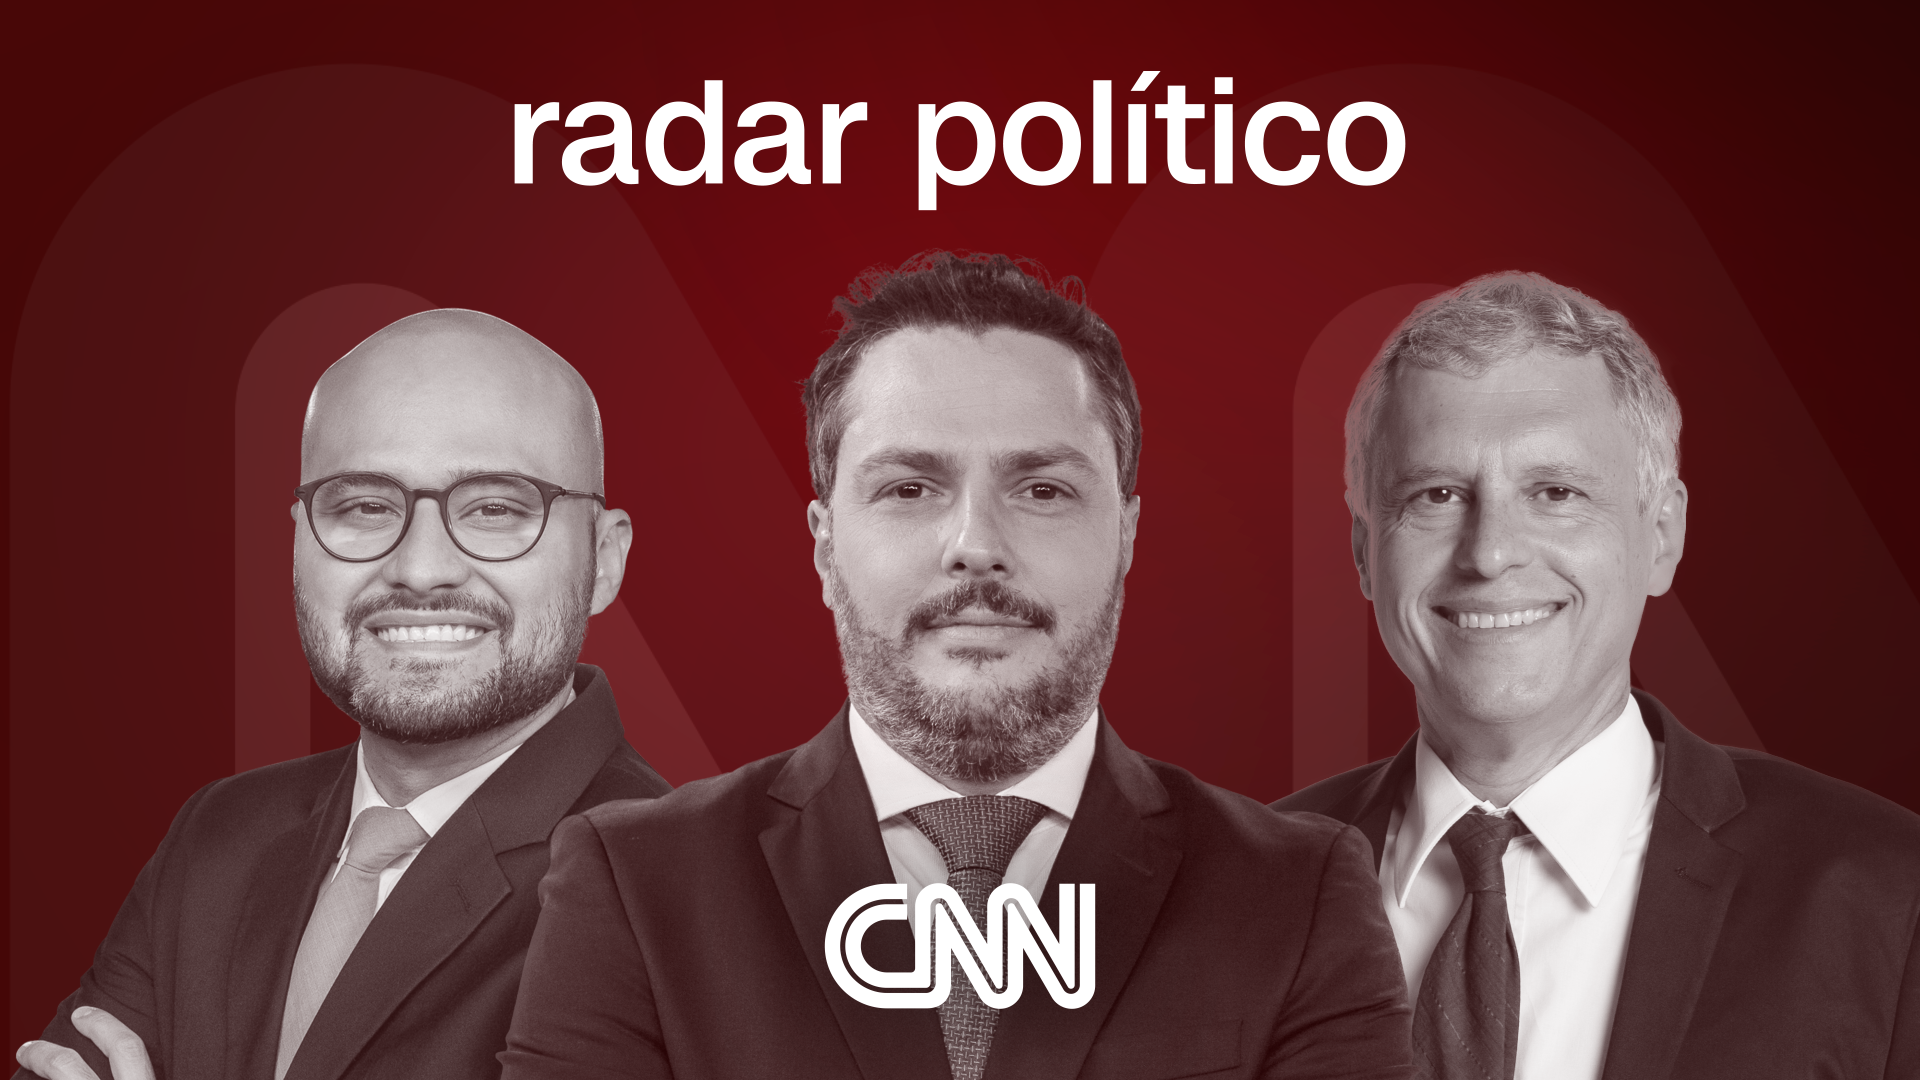 Cartela Radar Político - Rádio CNN